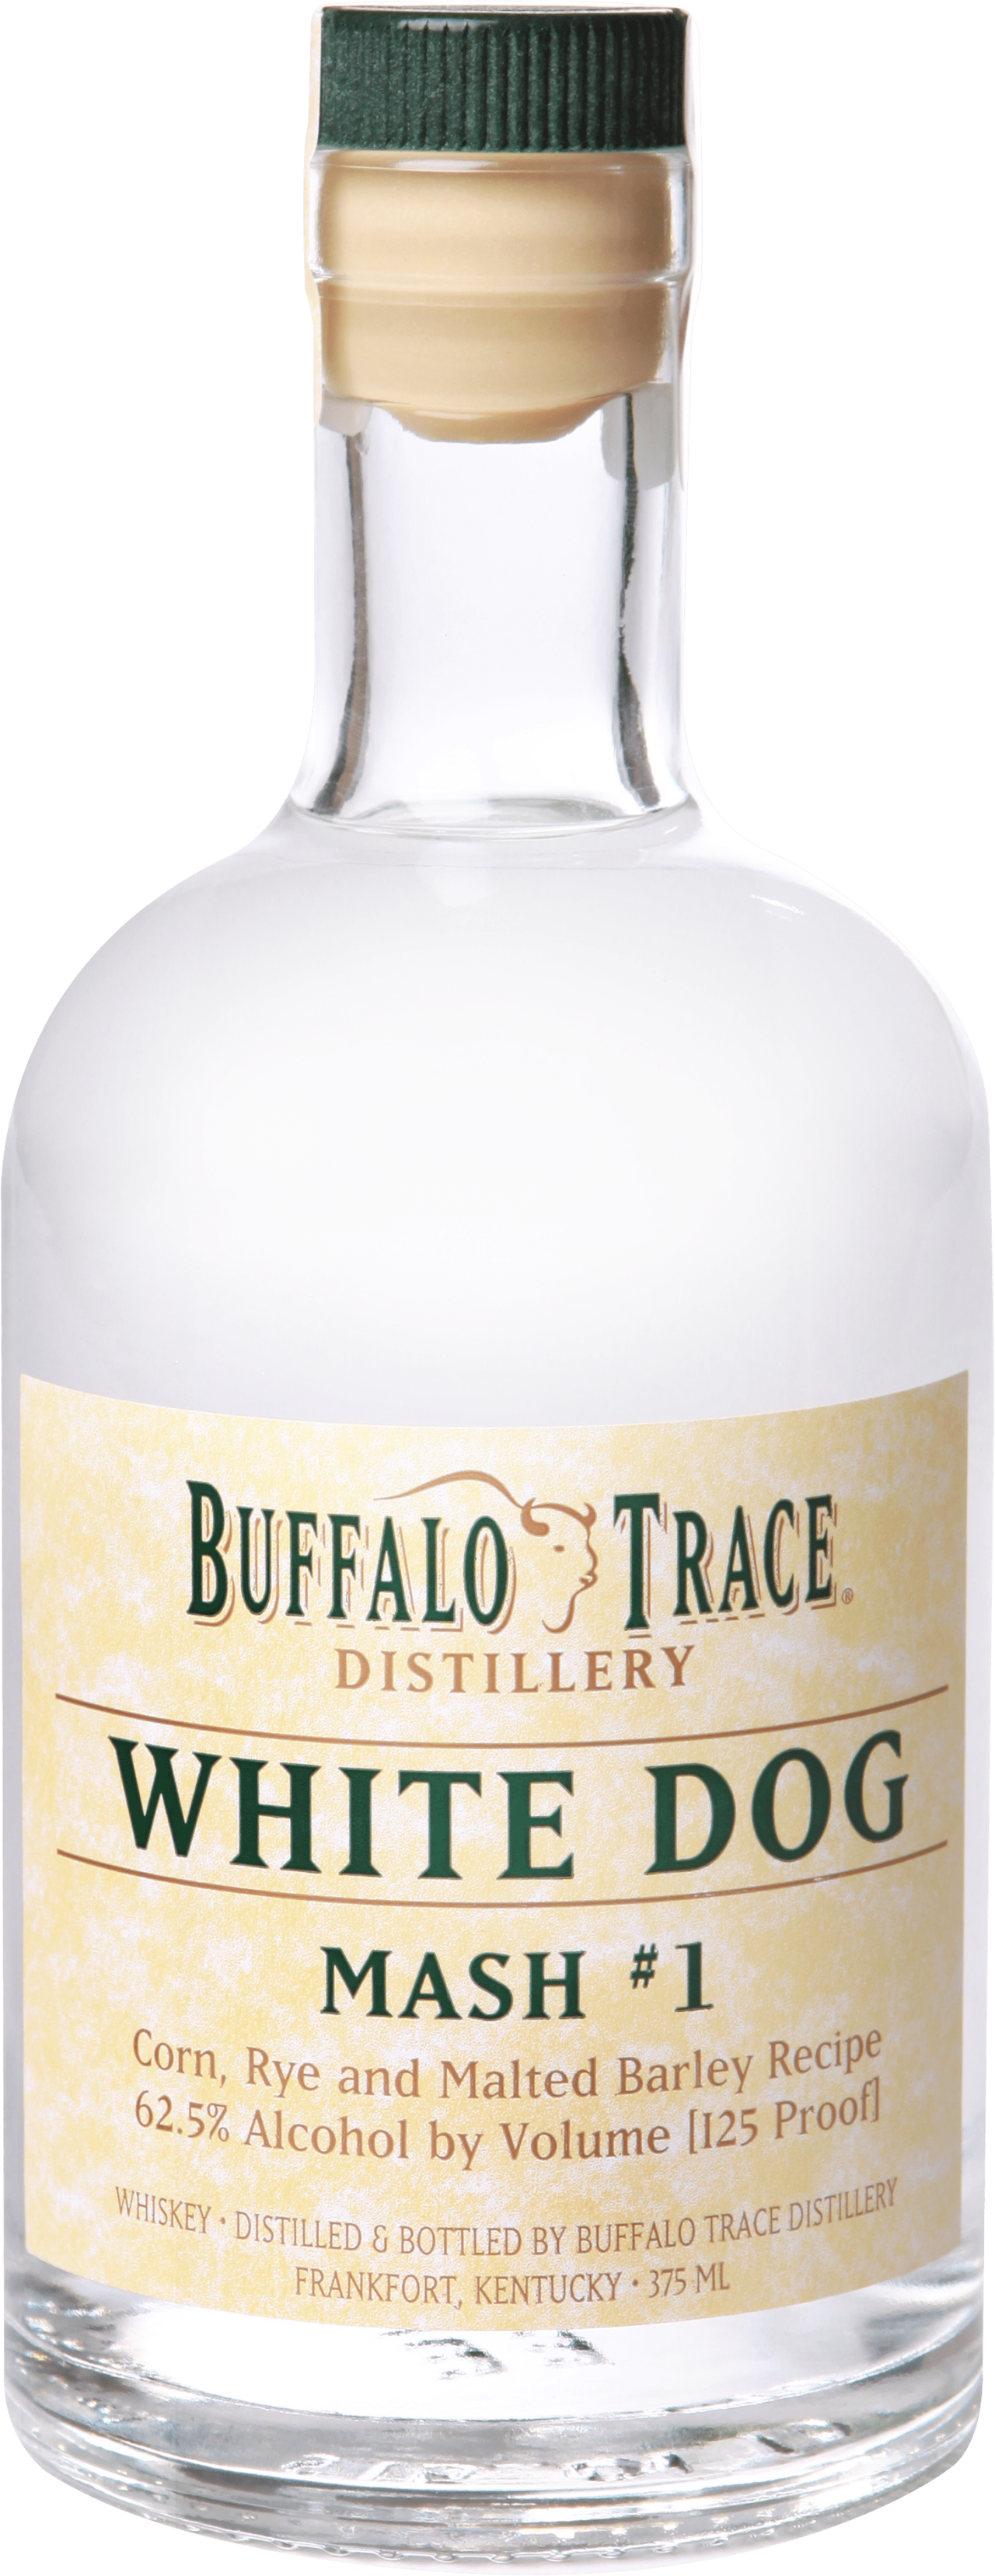 Buffalo Trace Distillery White Dog Mash #1 bottle 